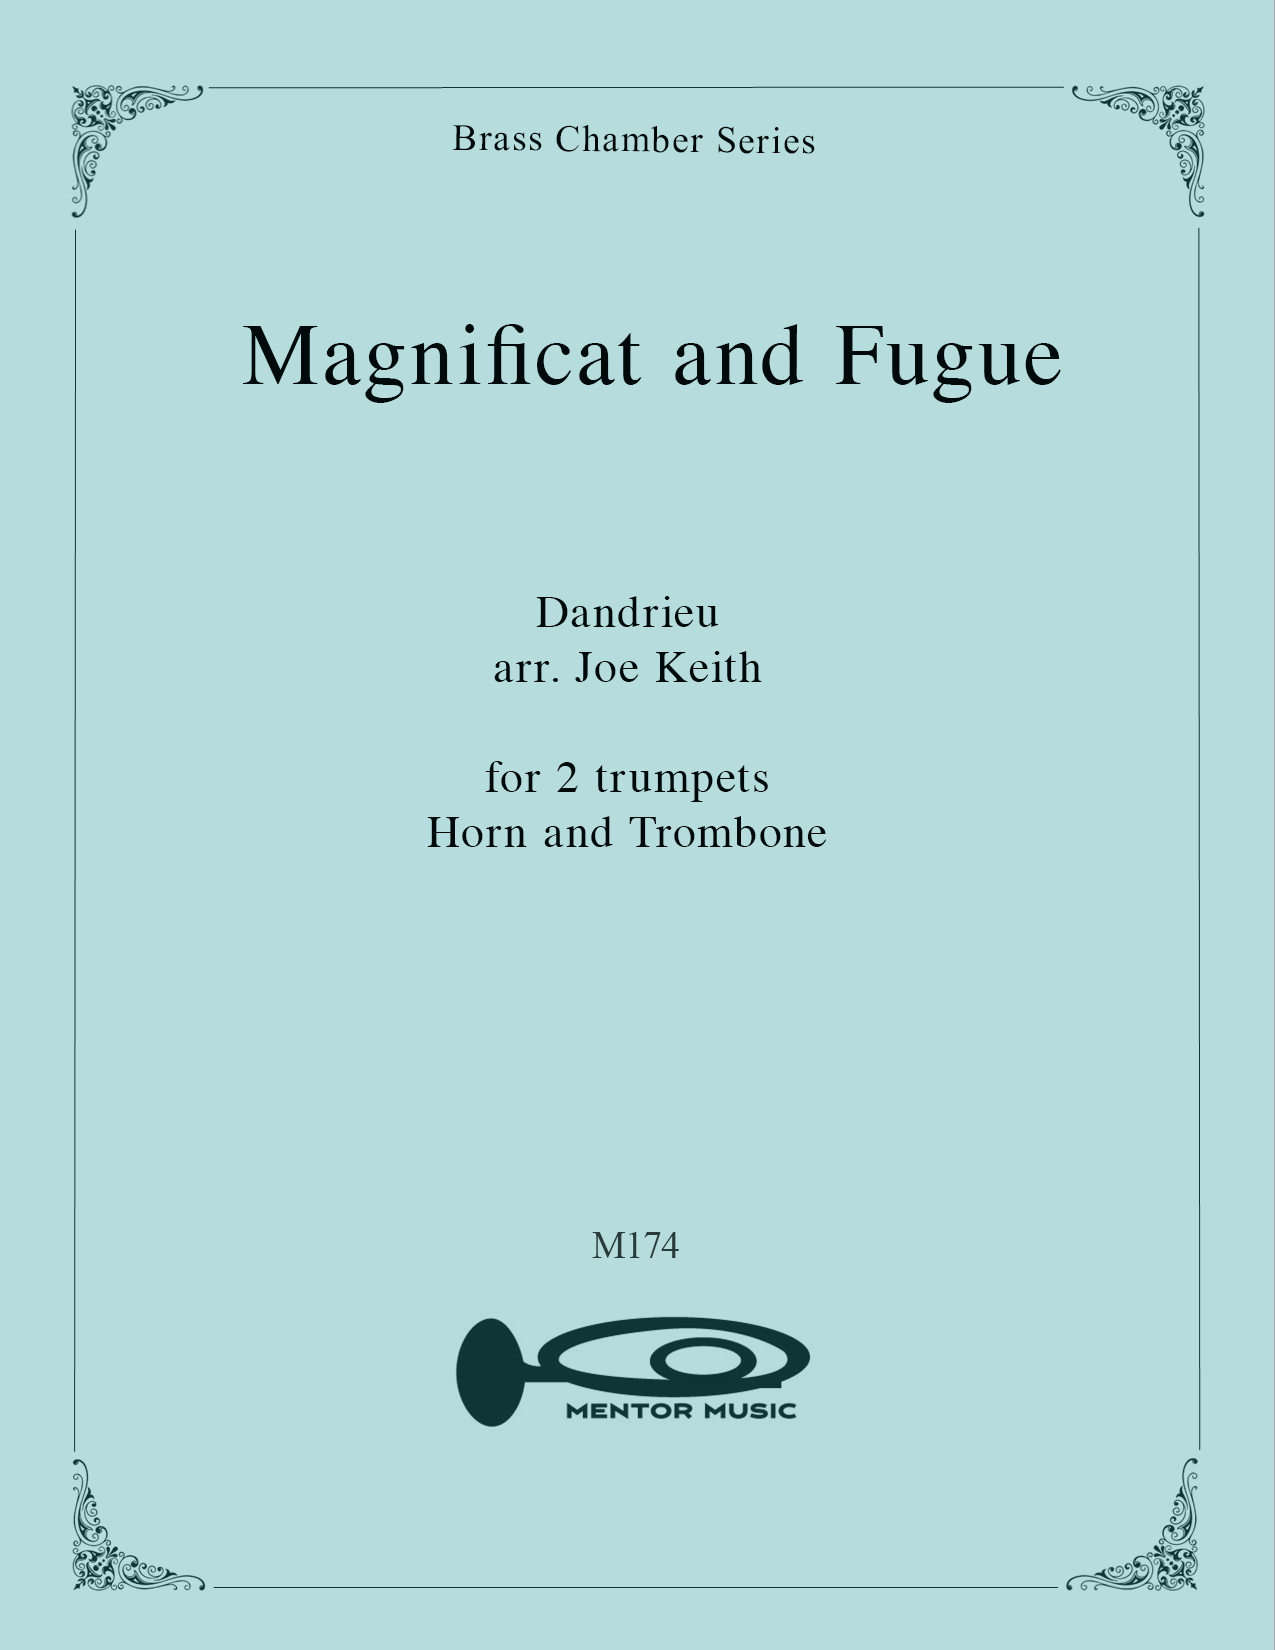 Magnificat and Fugue ( Dandrieu) for Brass Quartet